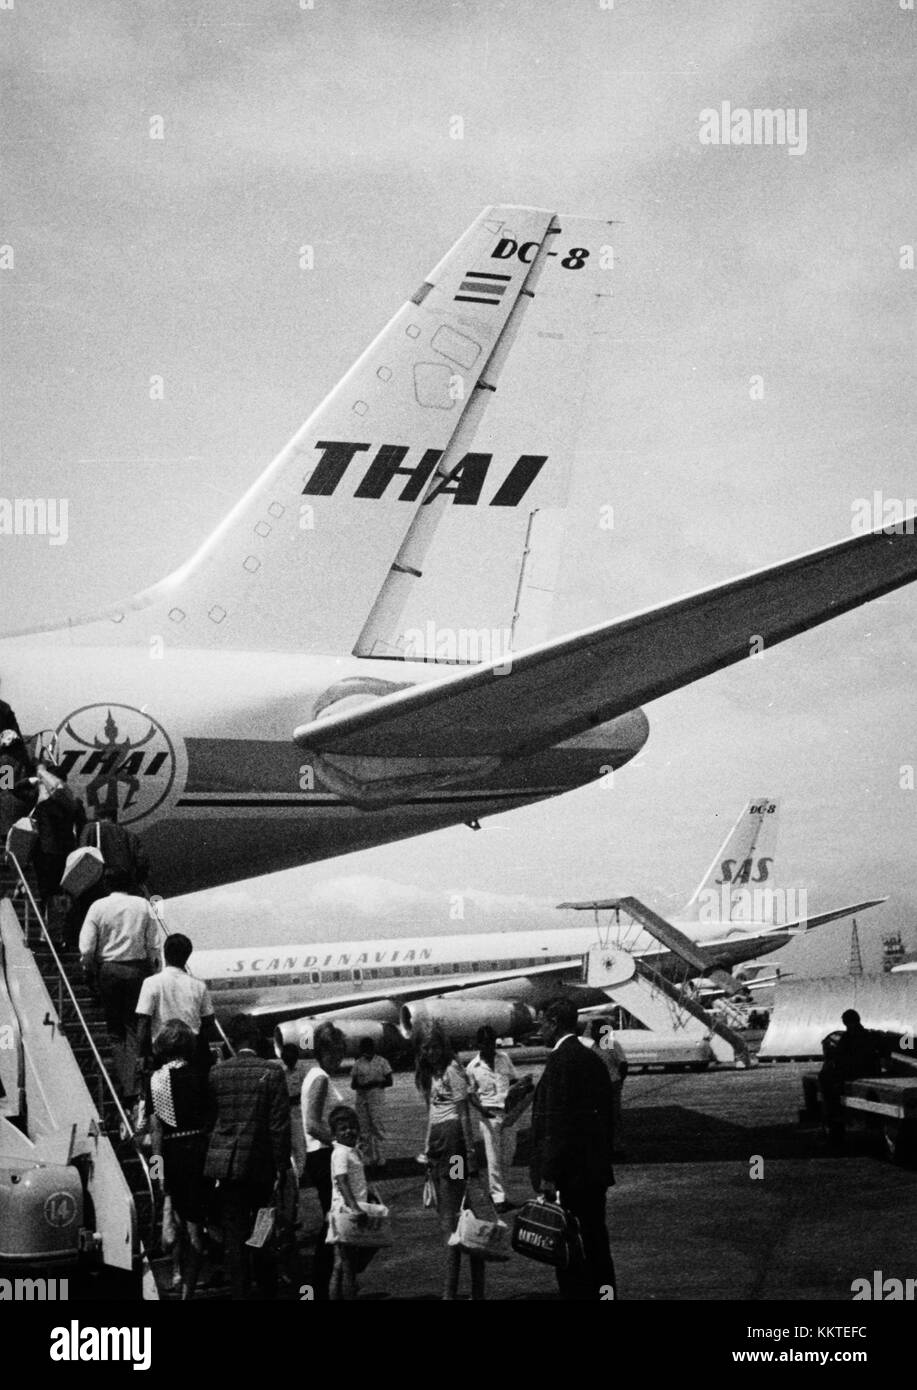 Aéroport de Don Muang DMK, Bangkok, Thaïlande, 1960. SAS DC 8 est à bord, les passagers s'embarquent Banque D'Images